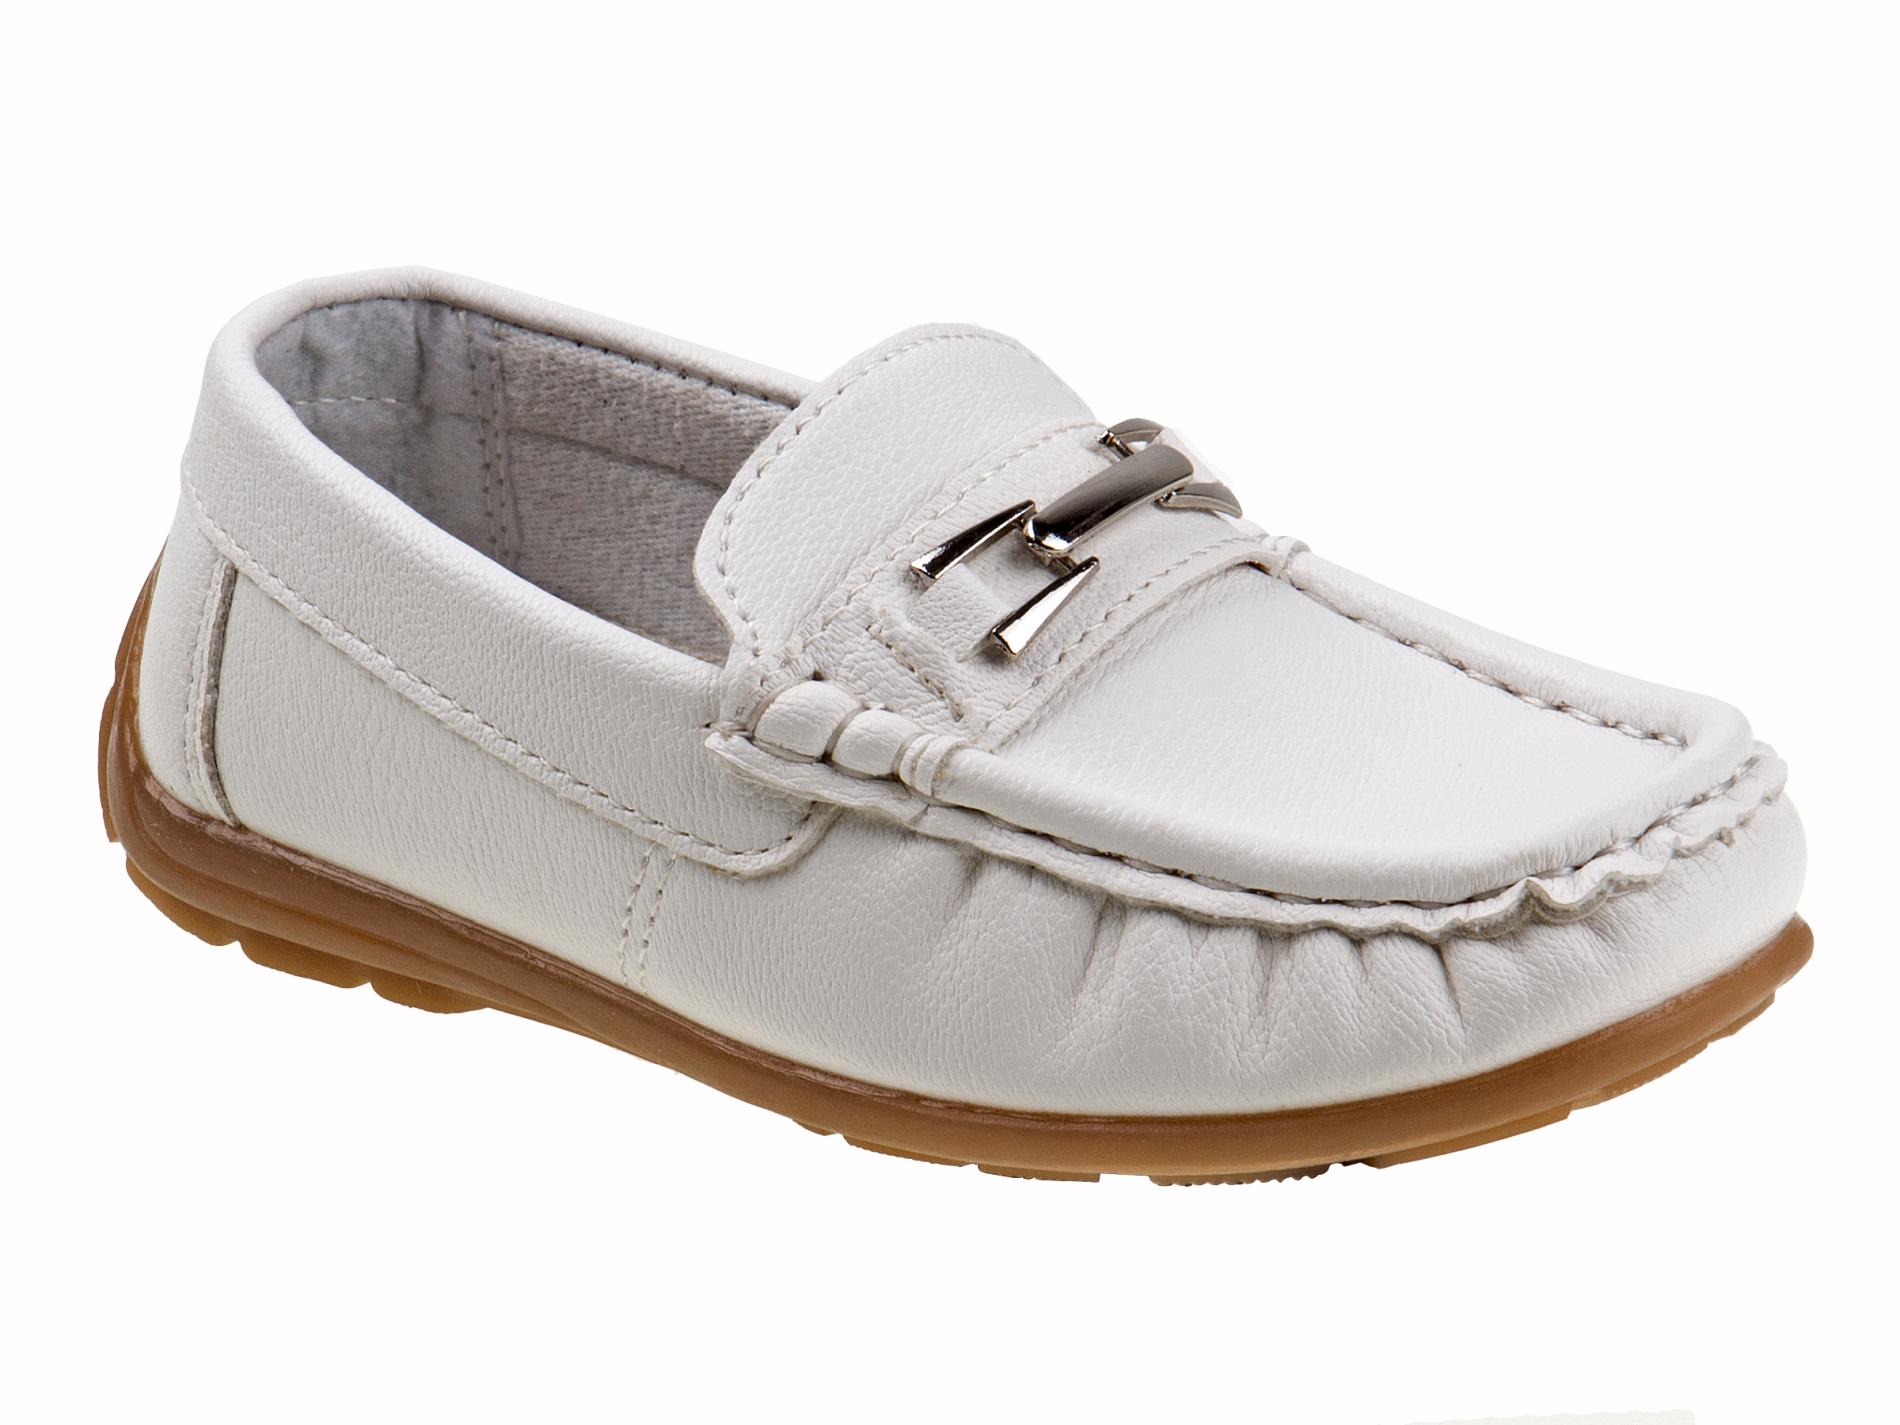 Josmo Boys' Embellished Loafer - White